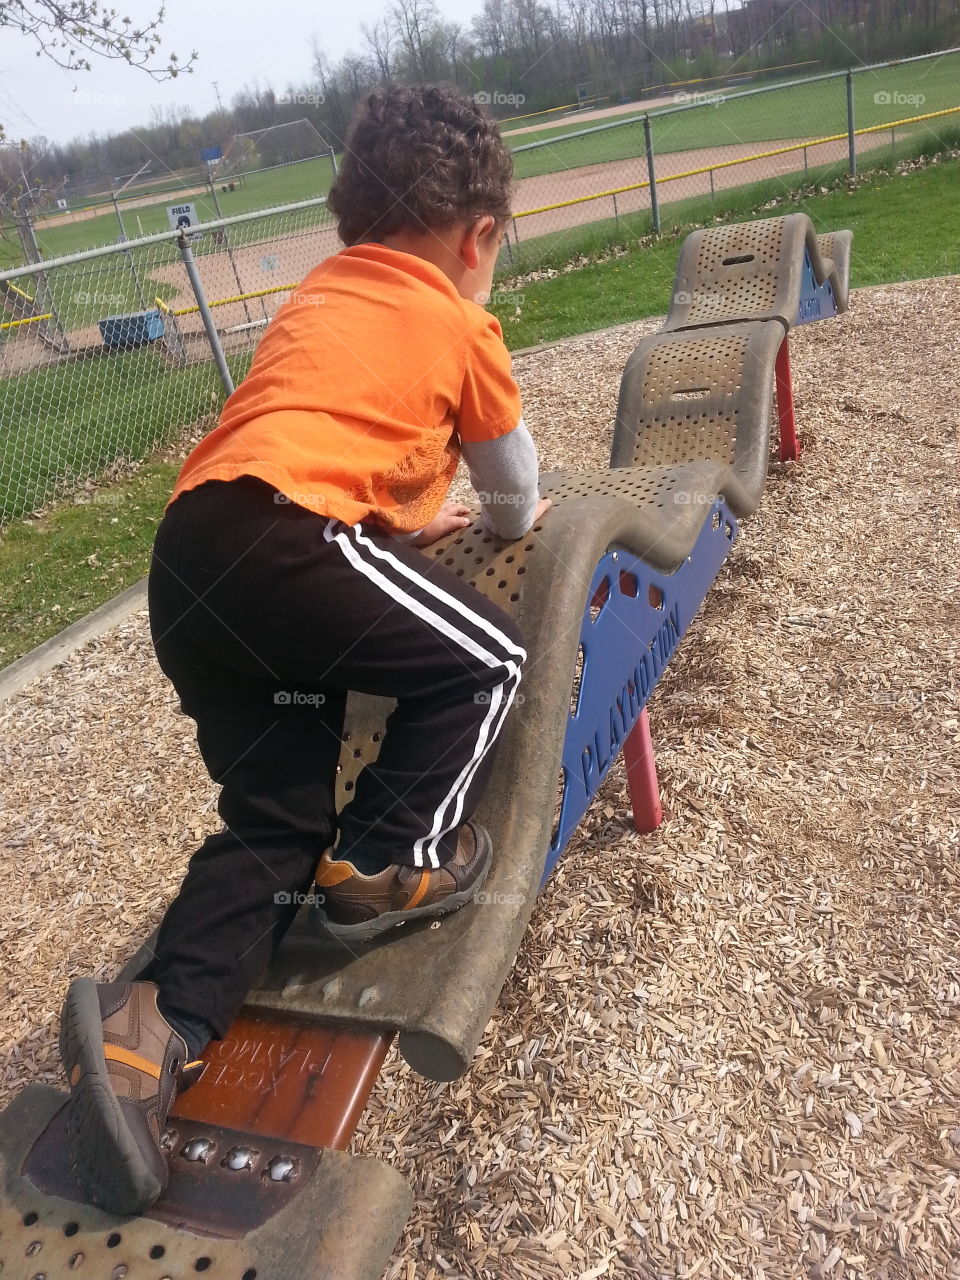 playmotion at playground. boy on playmotion at playground